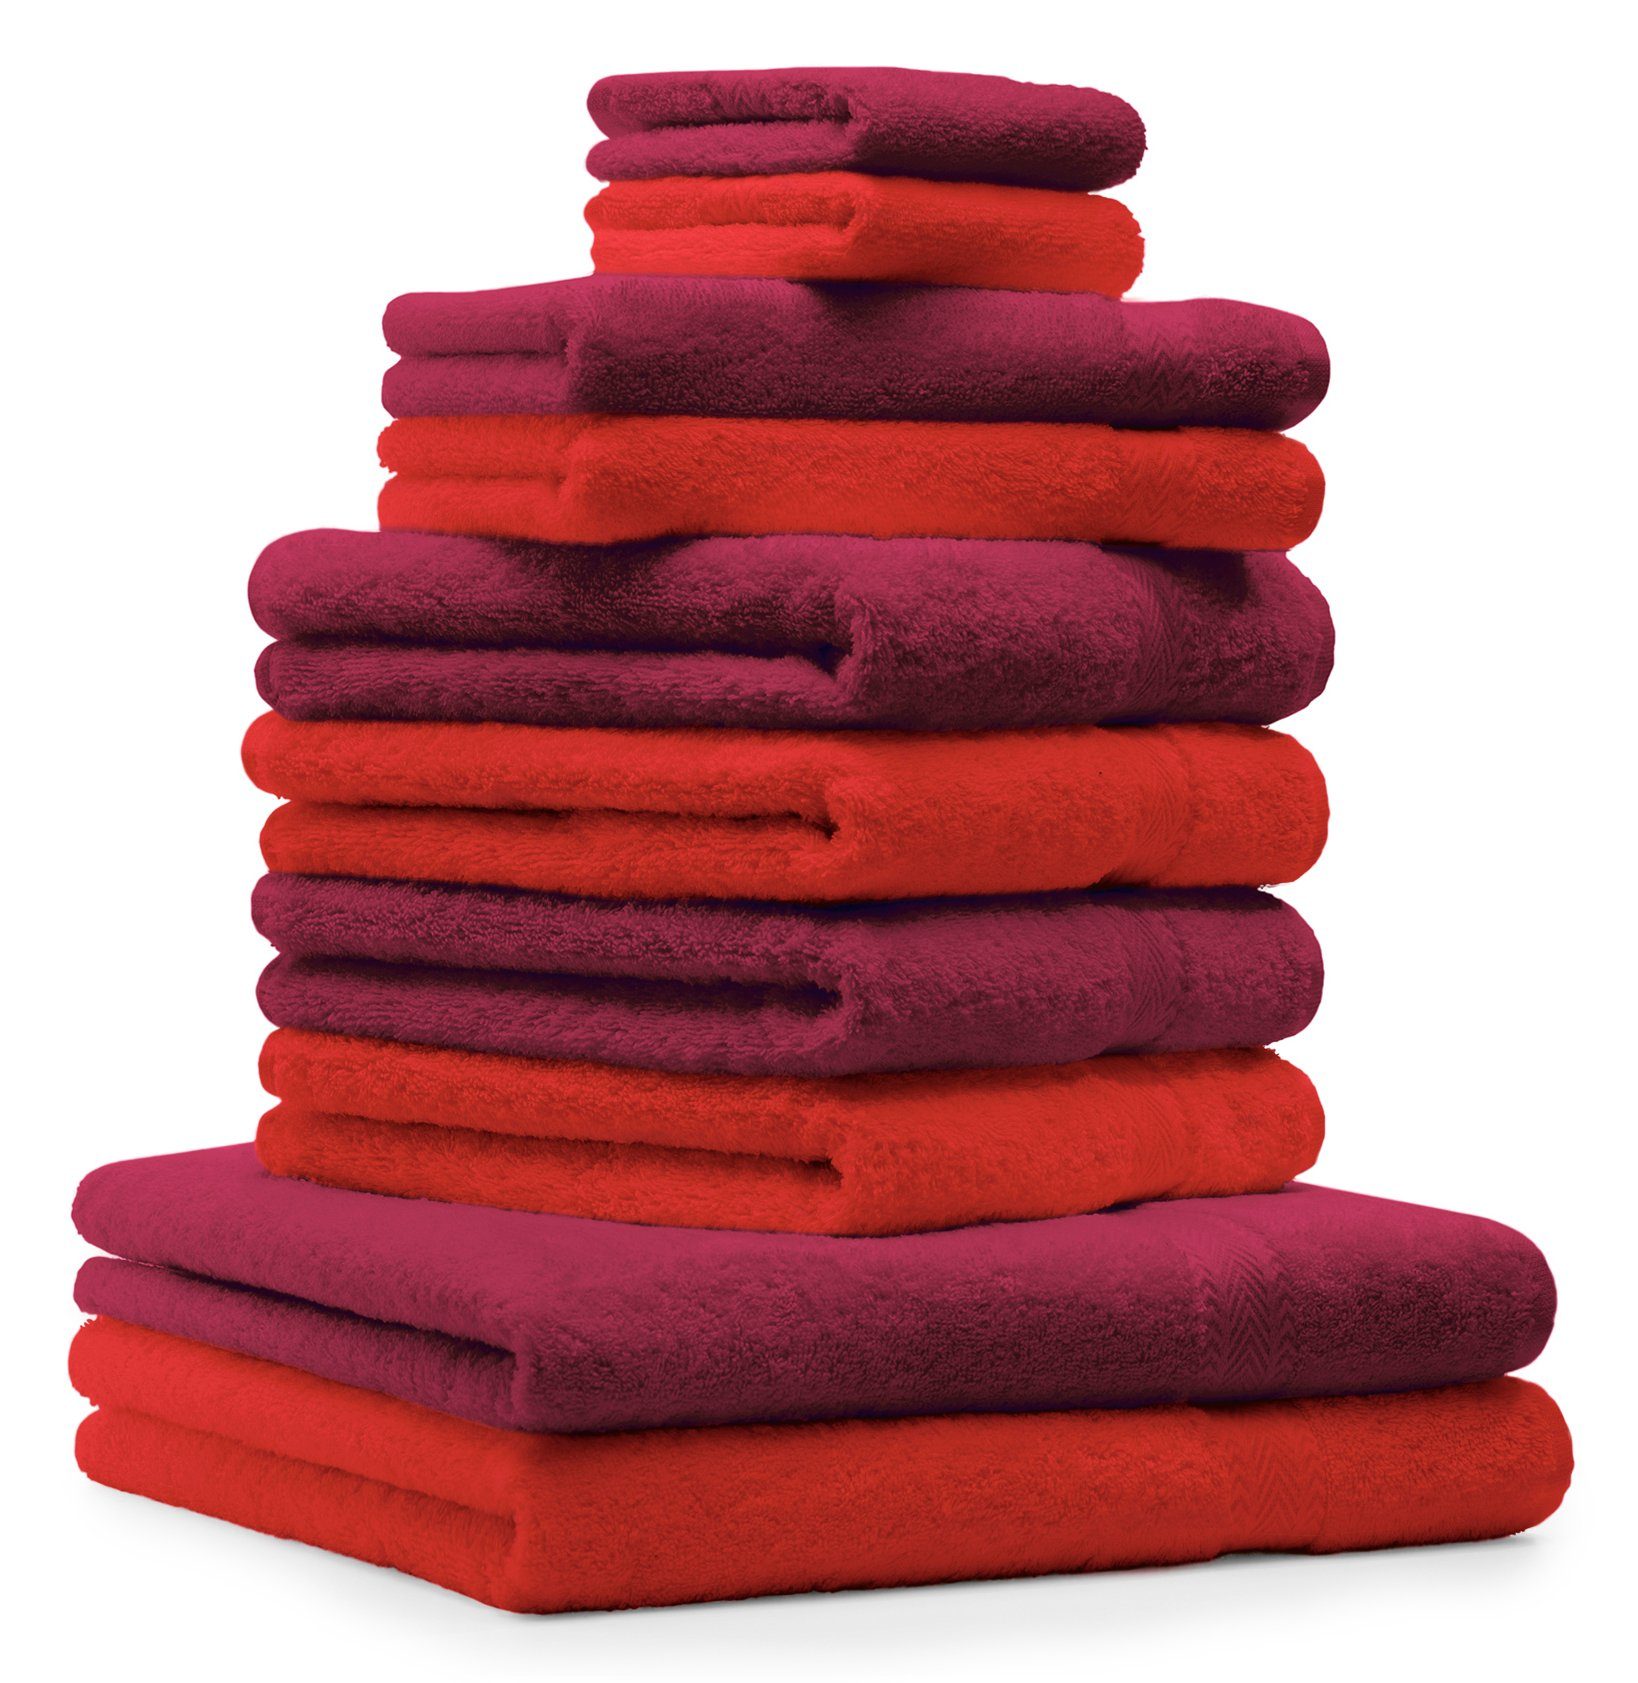 Betz Handtuch Set 10-TLG. Handtuch-Set CLASSIC 100% Baumwolle Farbe rot & dunkelrot, 100% Baumwolle